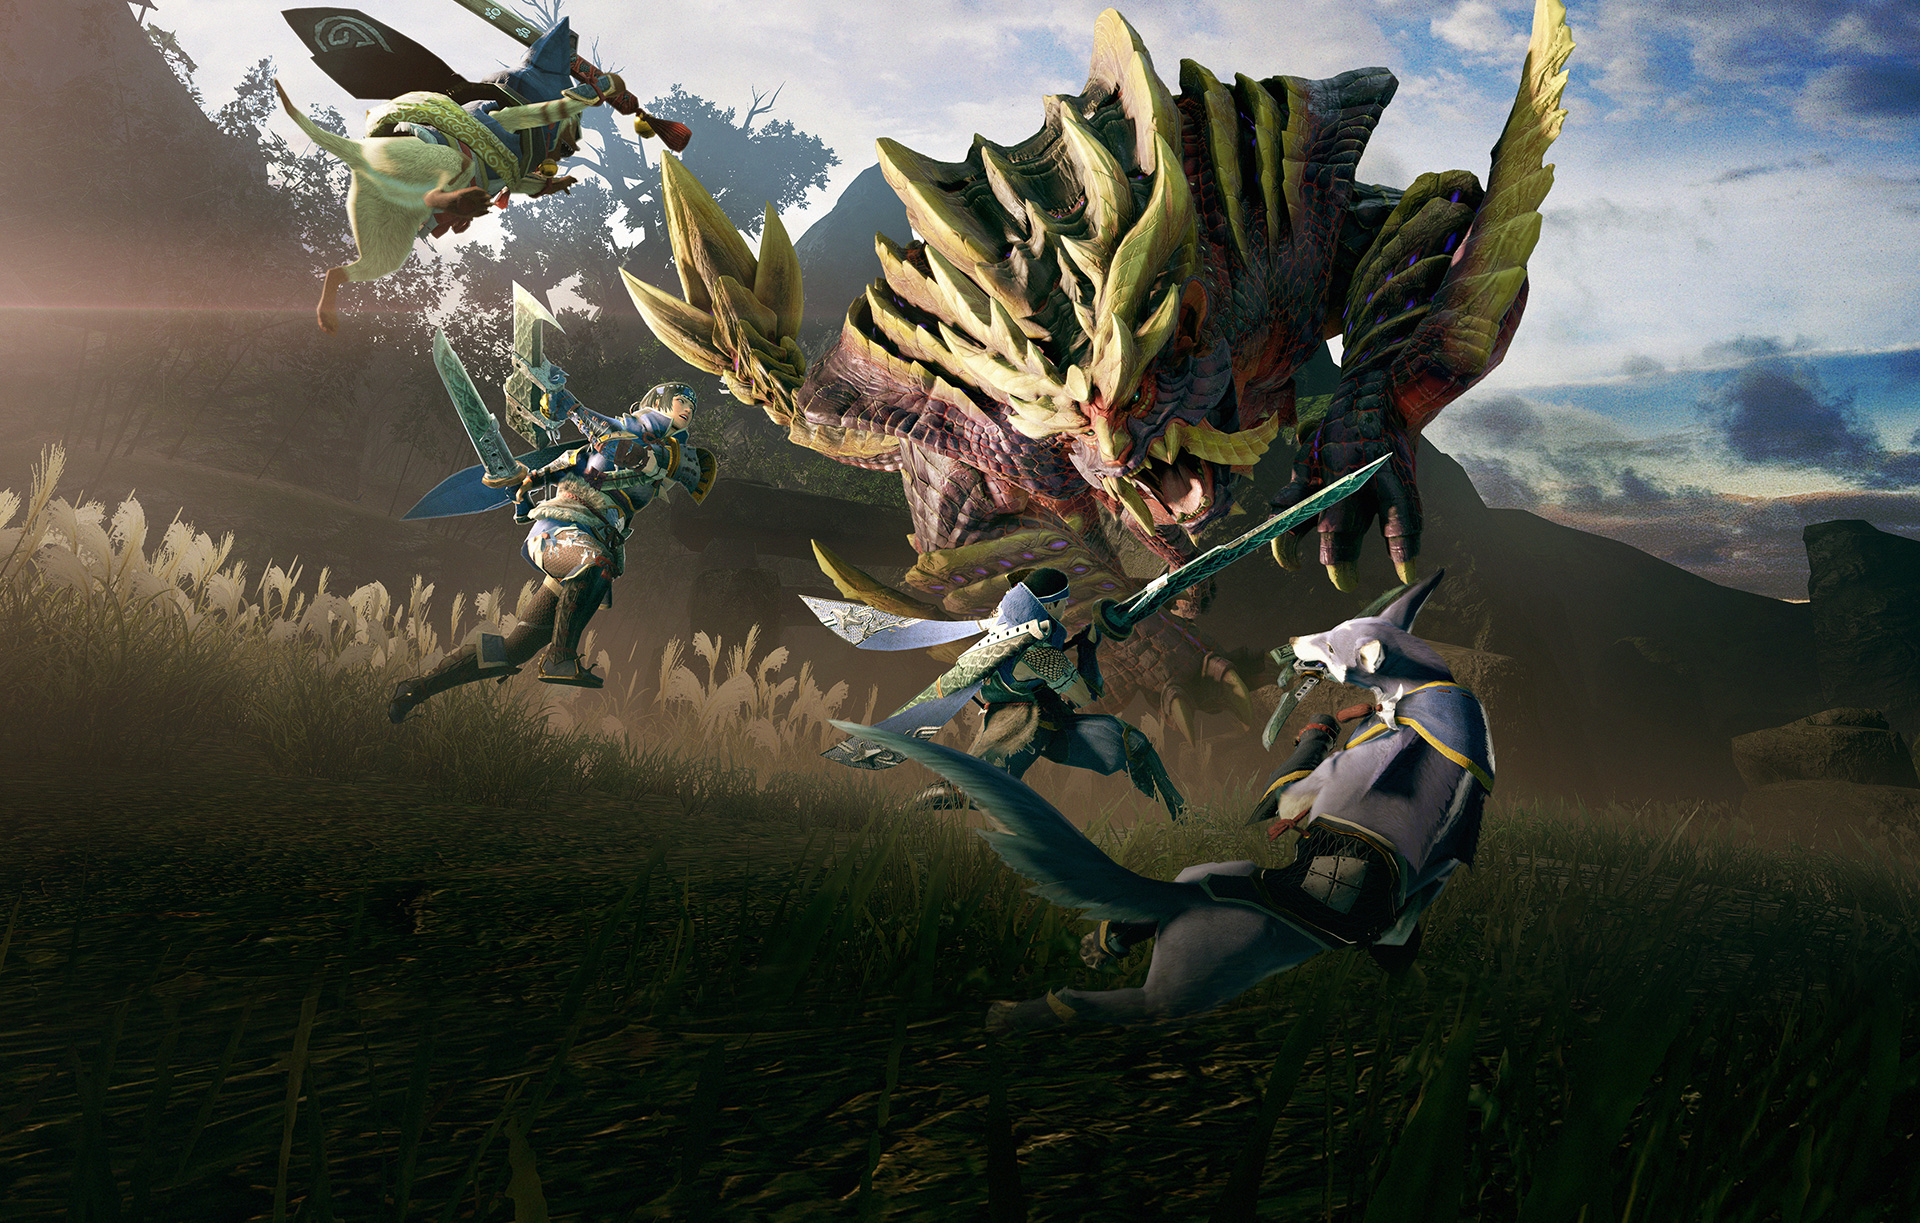 Monster Hunter Rise: Sunbreak  PC Steam Downloadable Content